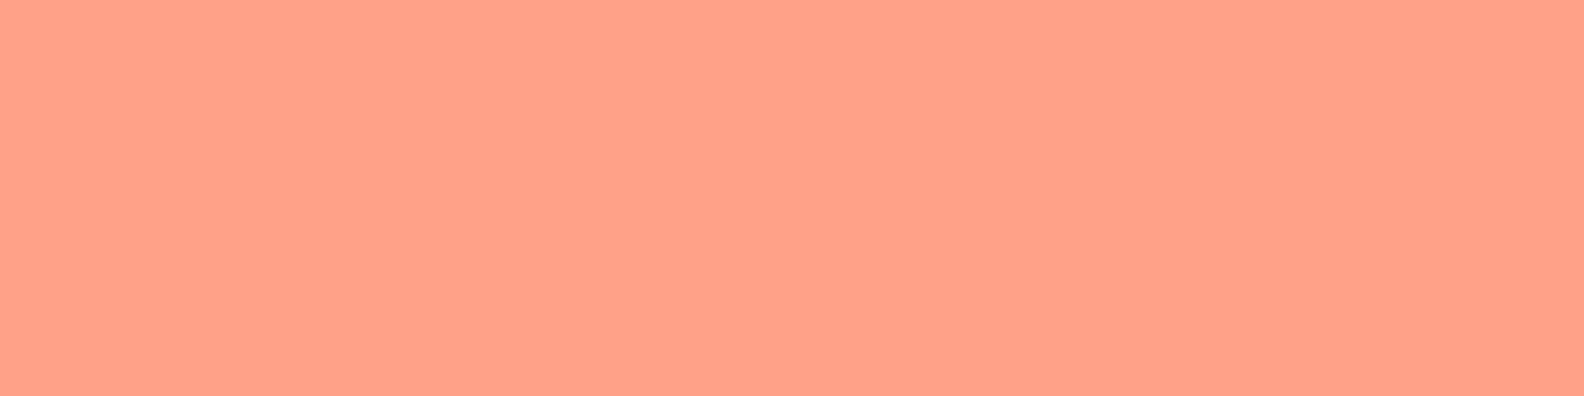 1584x396 Vivid Tangerine Solid Color Background